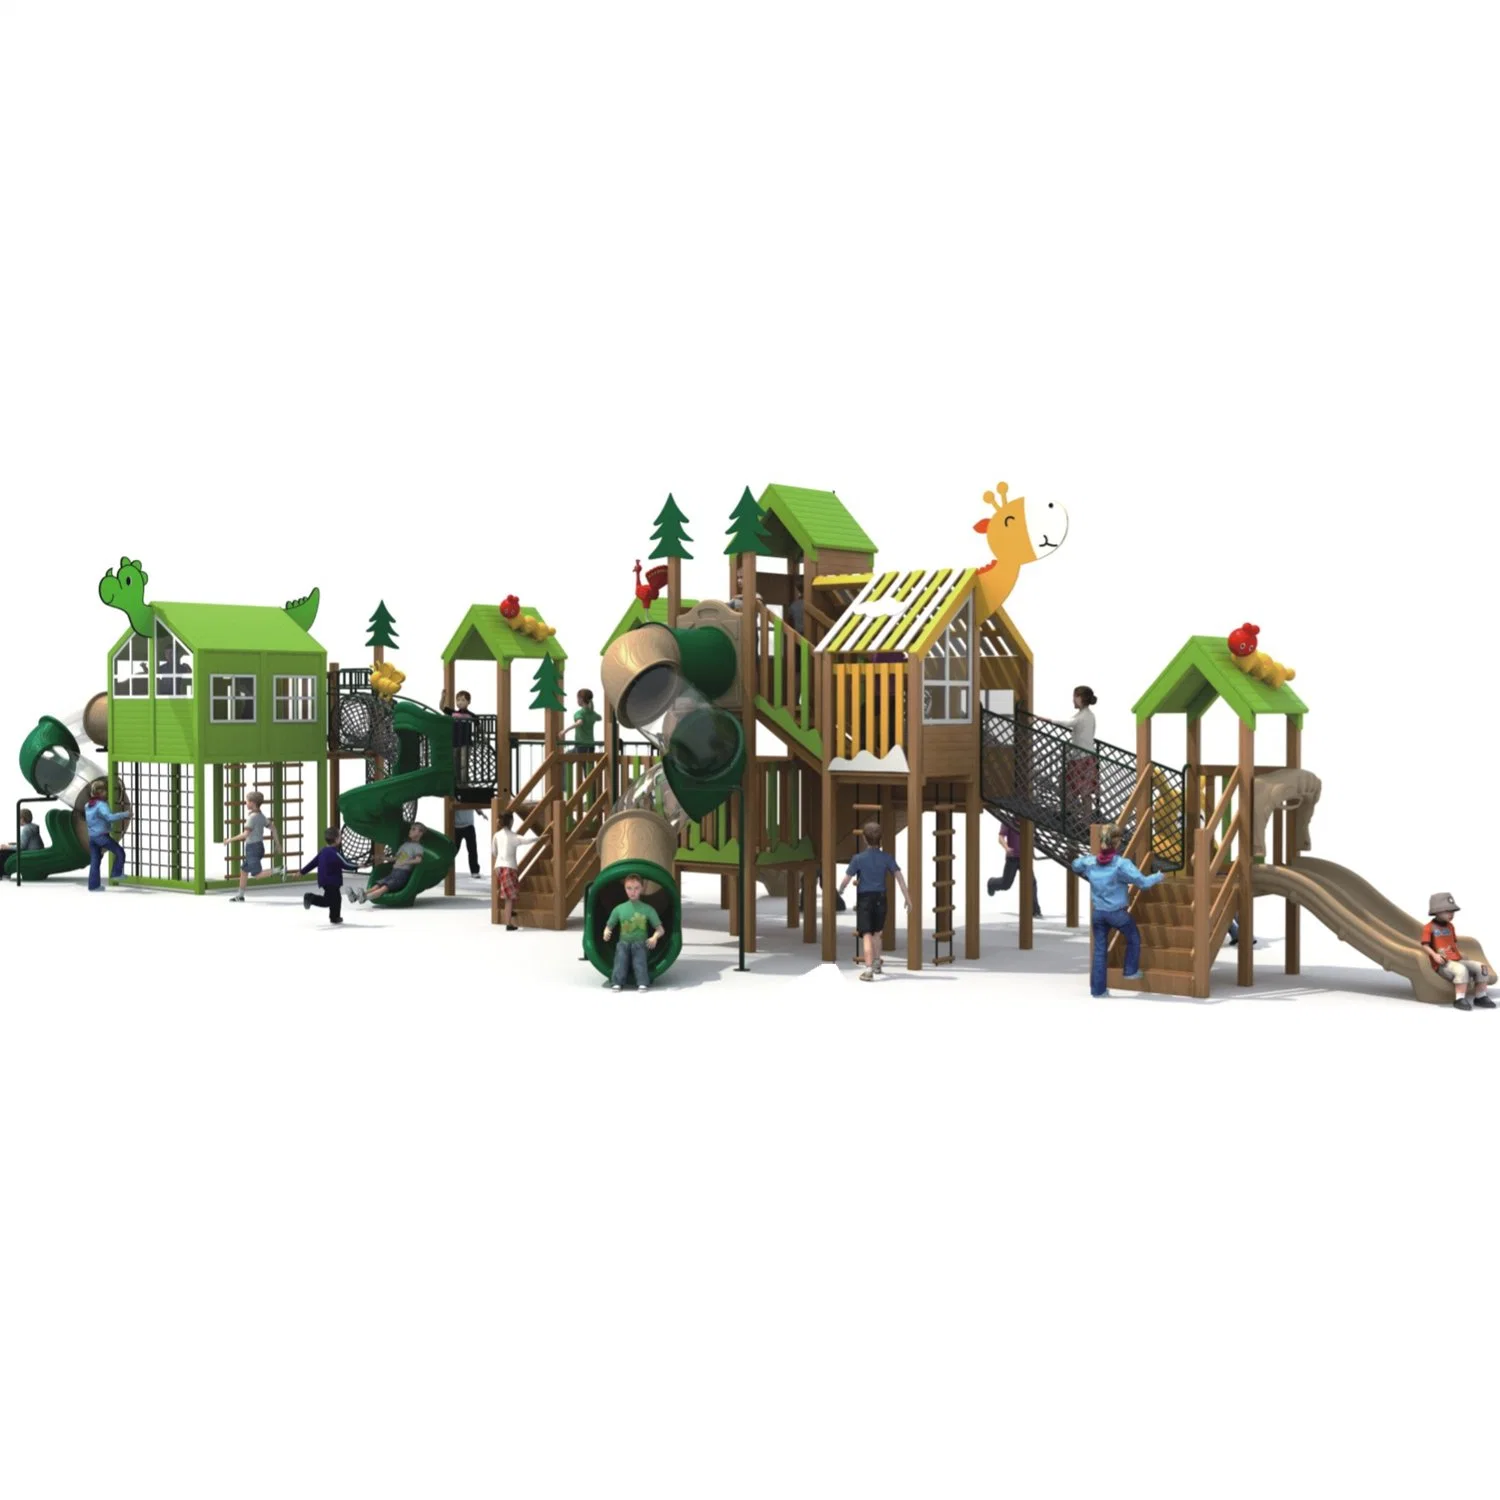 Outdoor Playground Equipment Children's Amusement Park Slide Climbing Frame Assembly